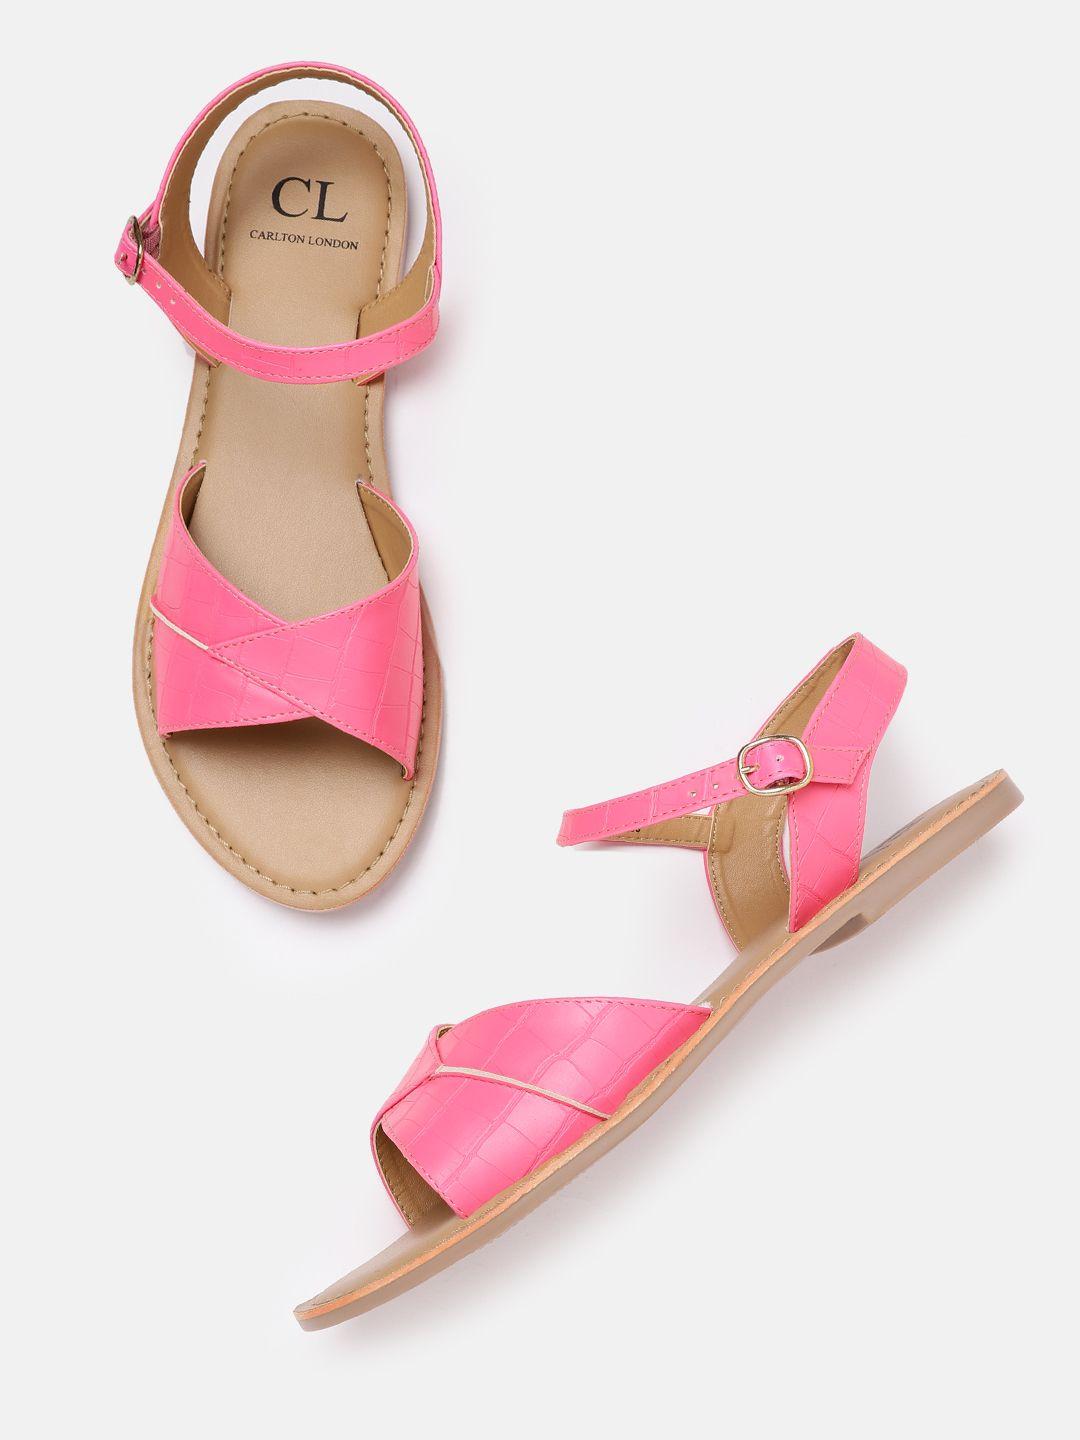 carlton-london-women-pink-croc-textured-open-toe-flats